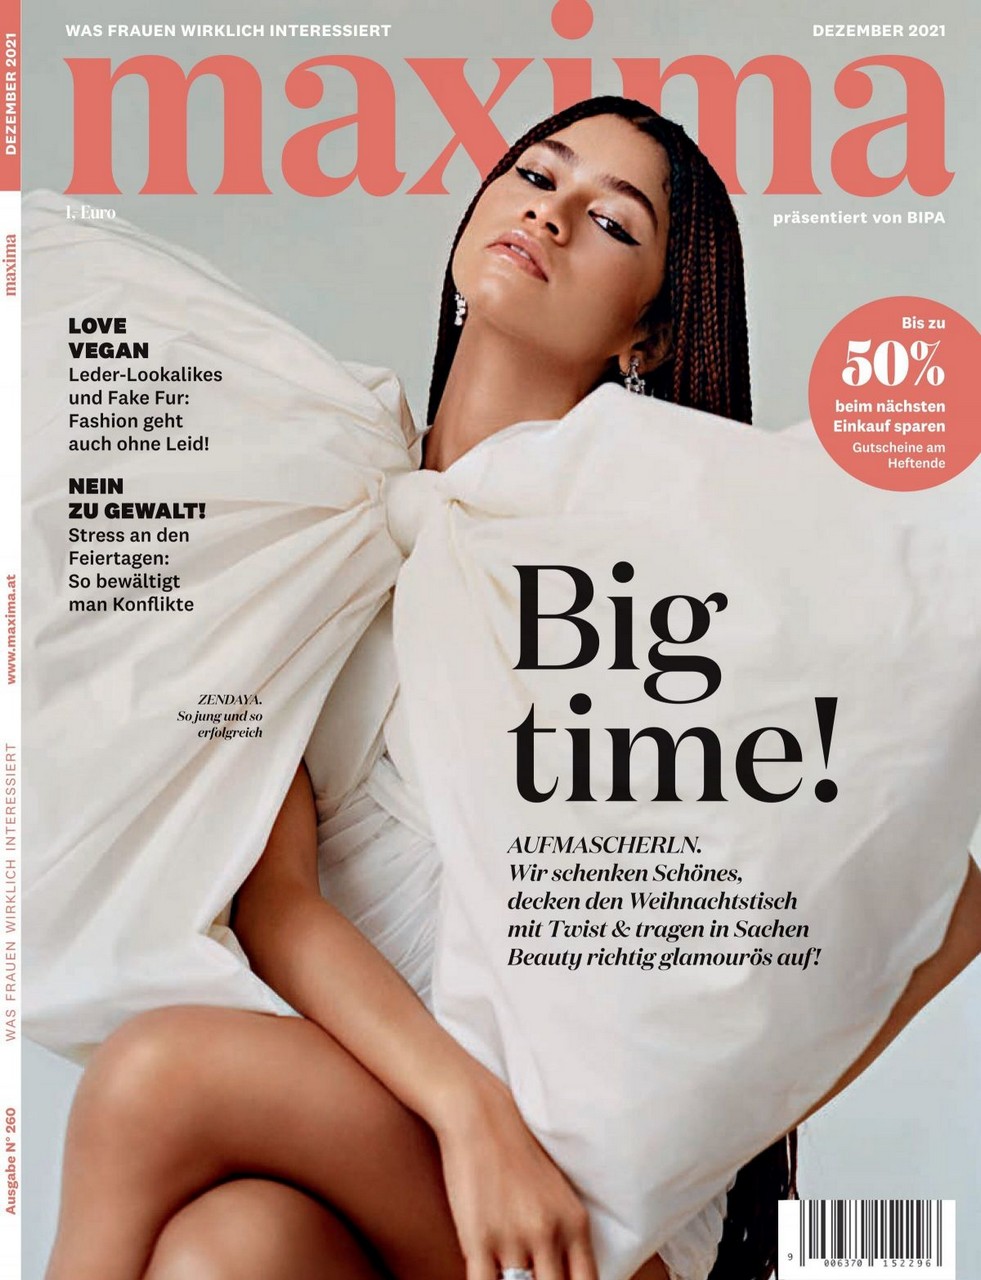 Zendaya For Maxima Magazine Germany December